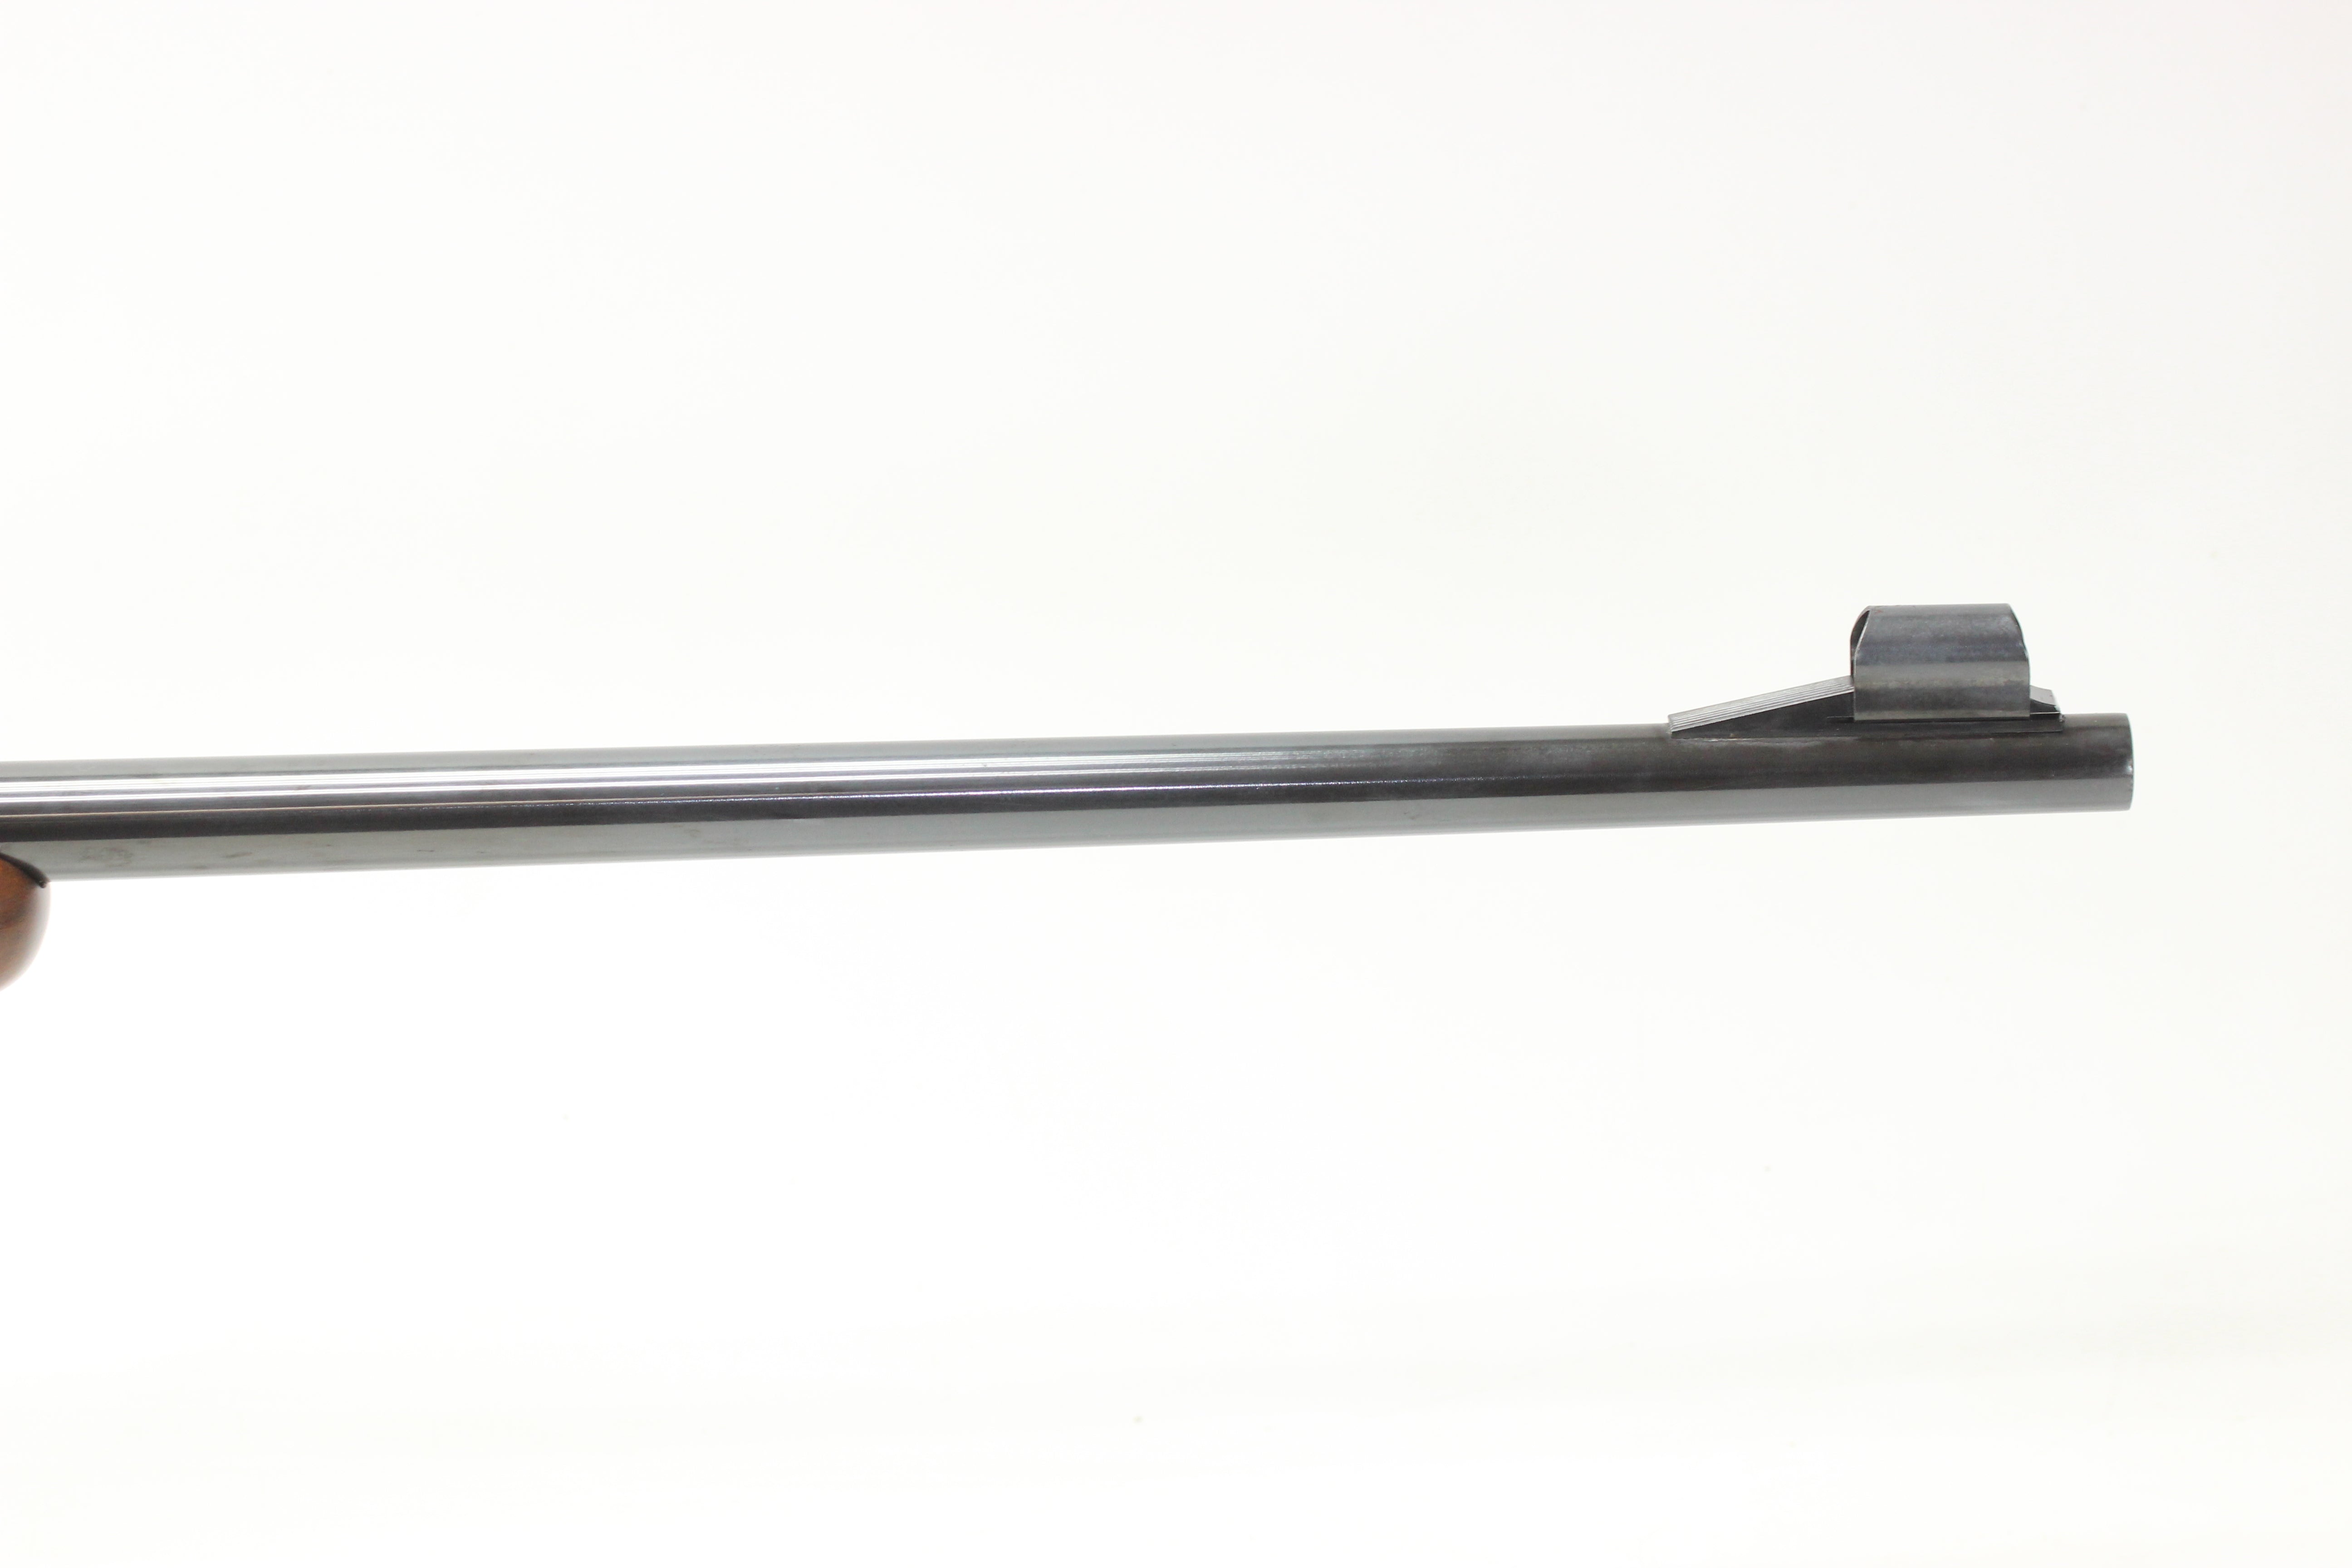 .270 Win Standard Rifle - 1958